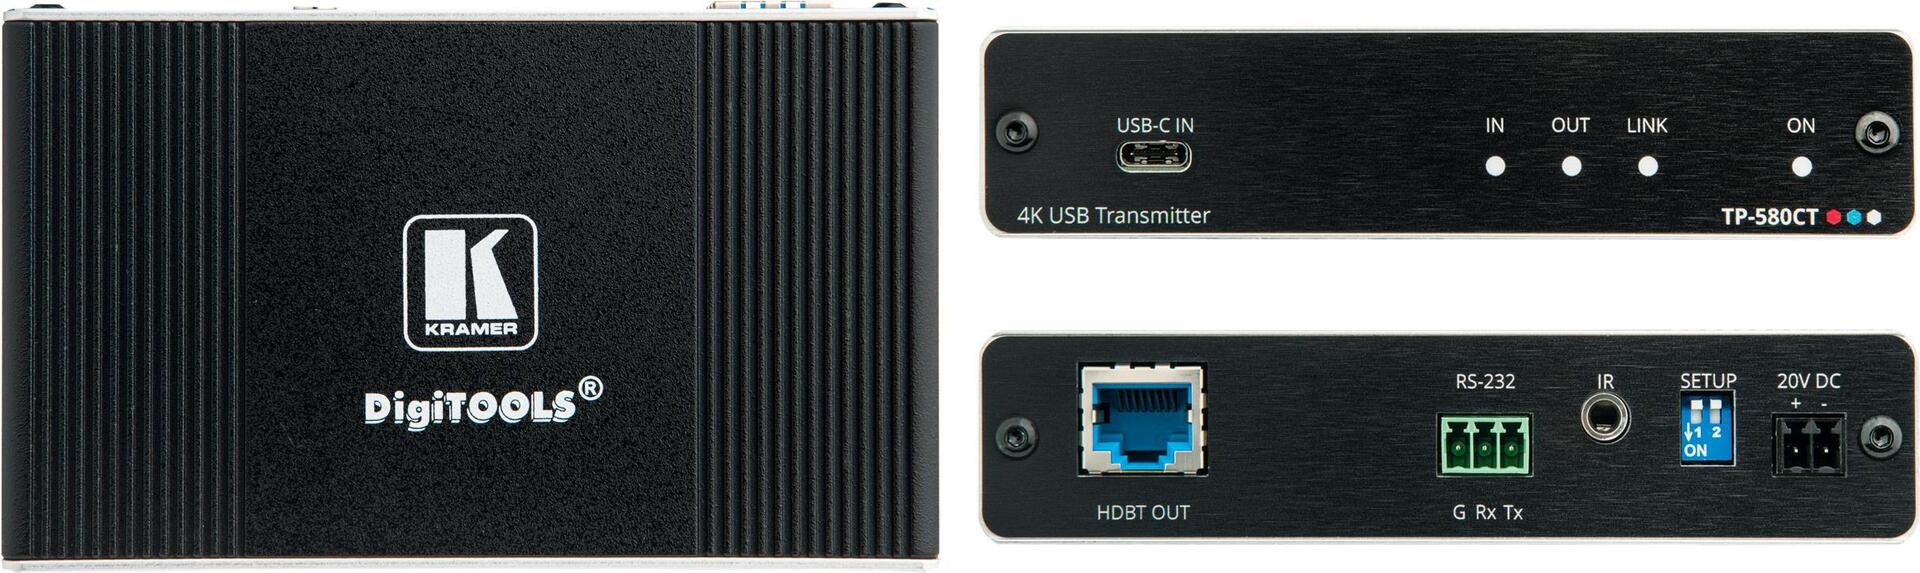 TP-580CT - USB-C audio/video extender via HDBaseT (50-80574090)